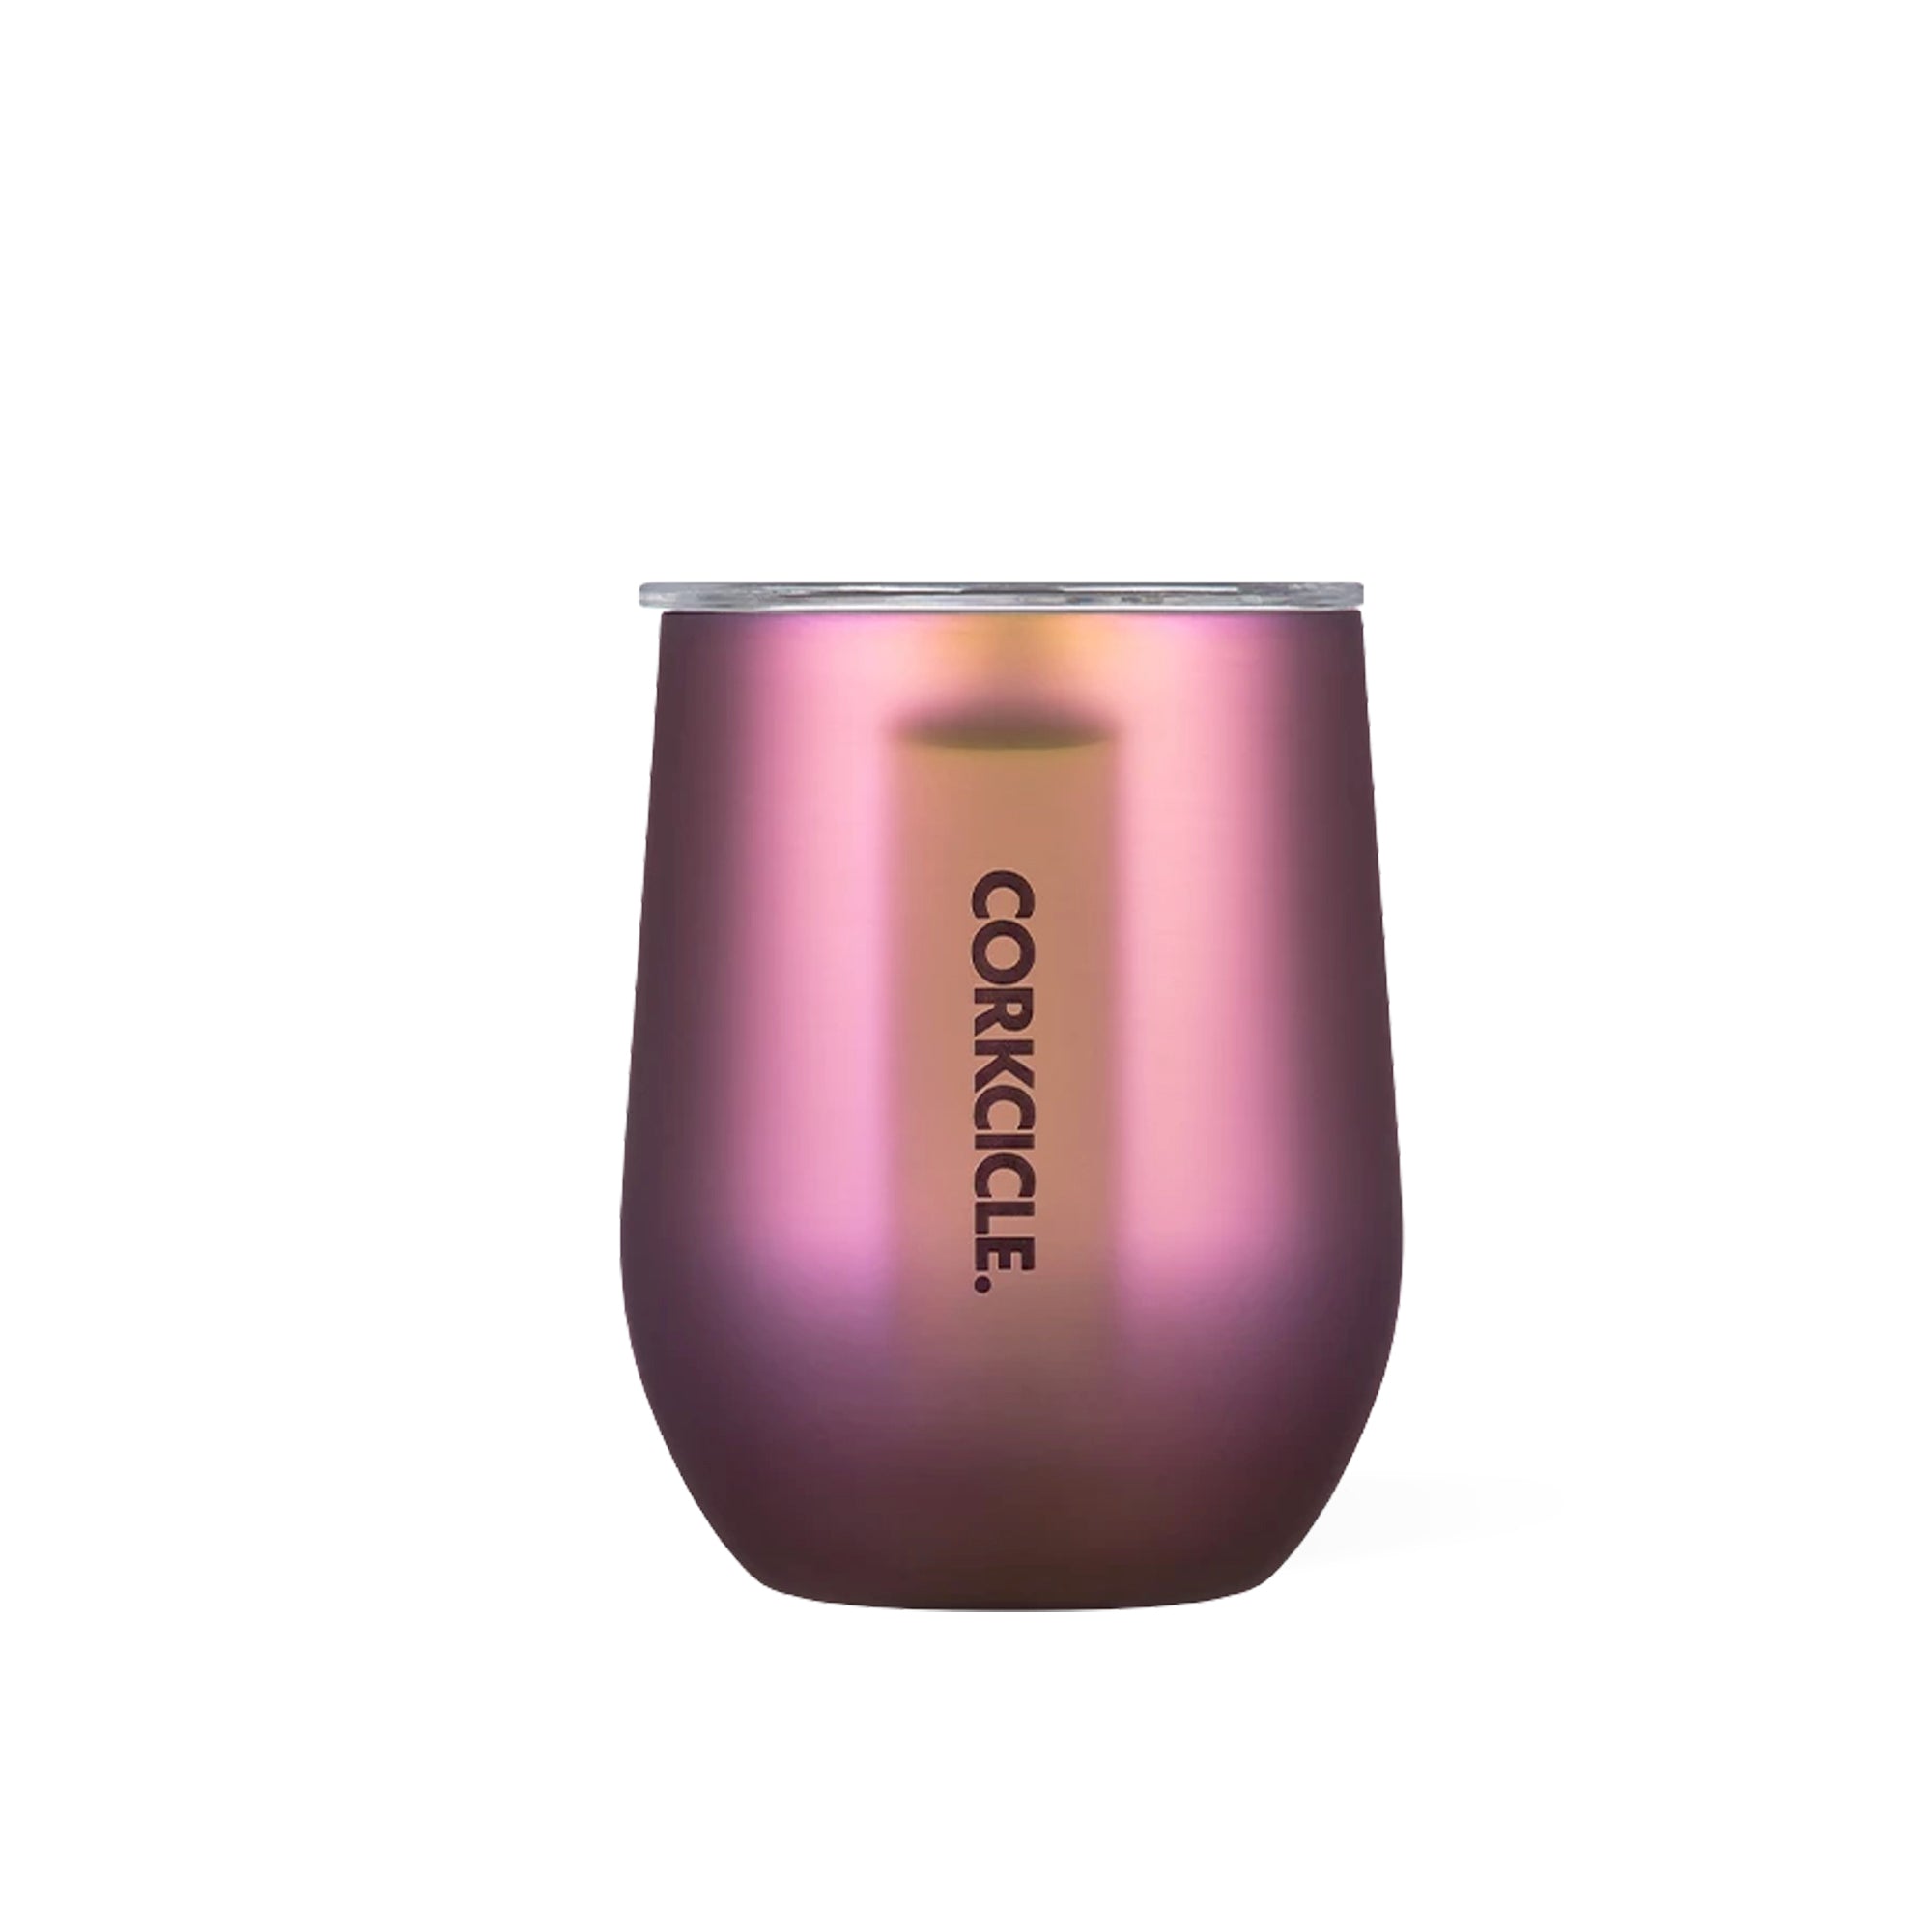 Joffrey's 12oz Corkcicle Glass Mug Set (2) - Prism